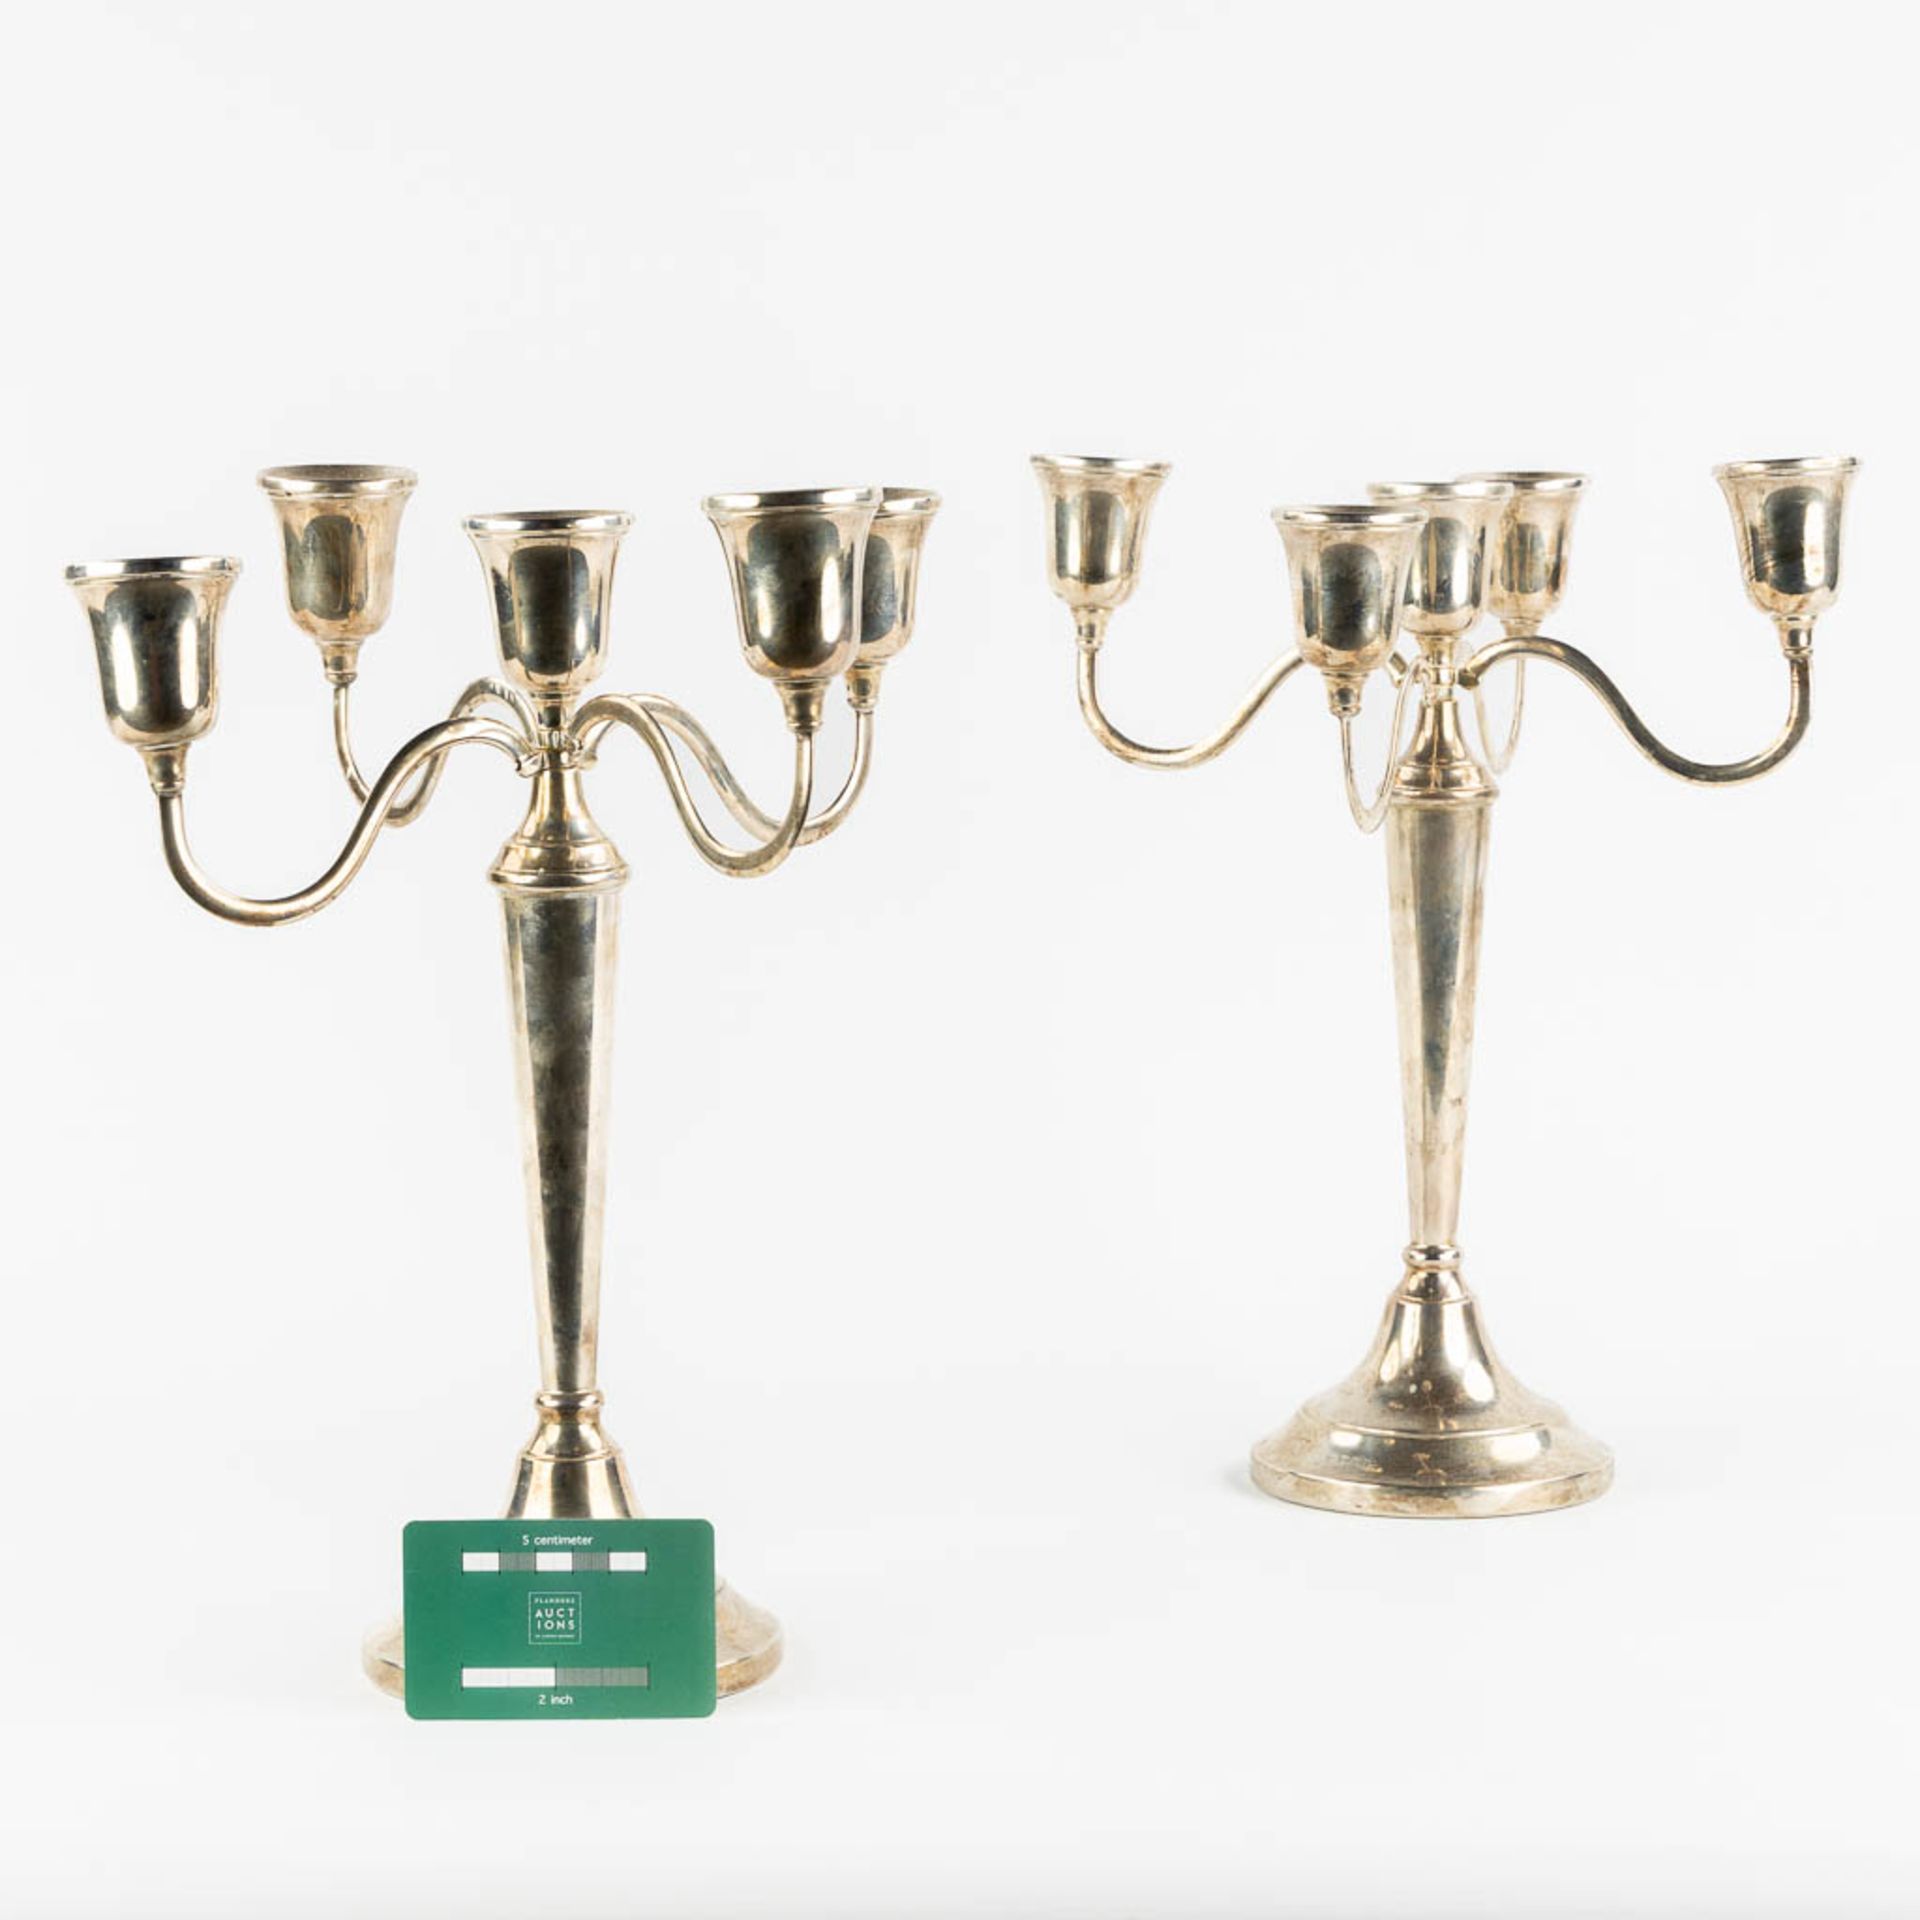 David Shaw Silverware Ltd, A pair of silver candelabra. 1992. (L:28 x W:28 x H:34 cm) - Image 2 of 12